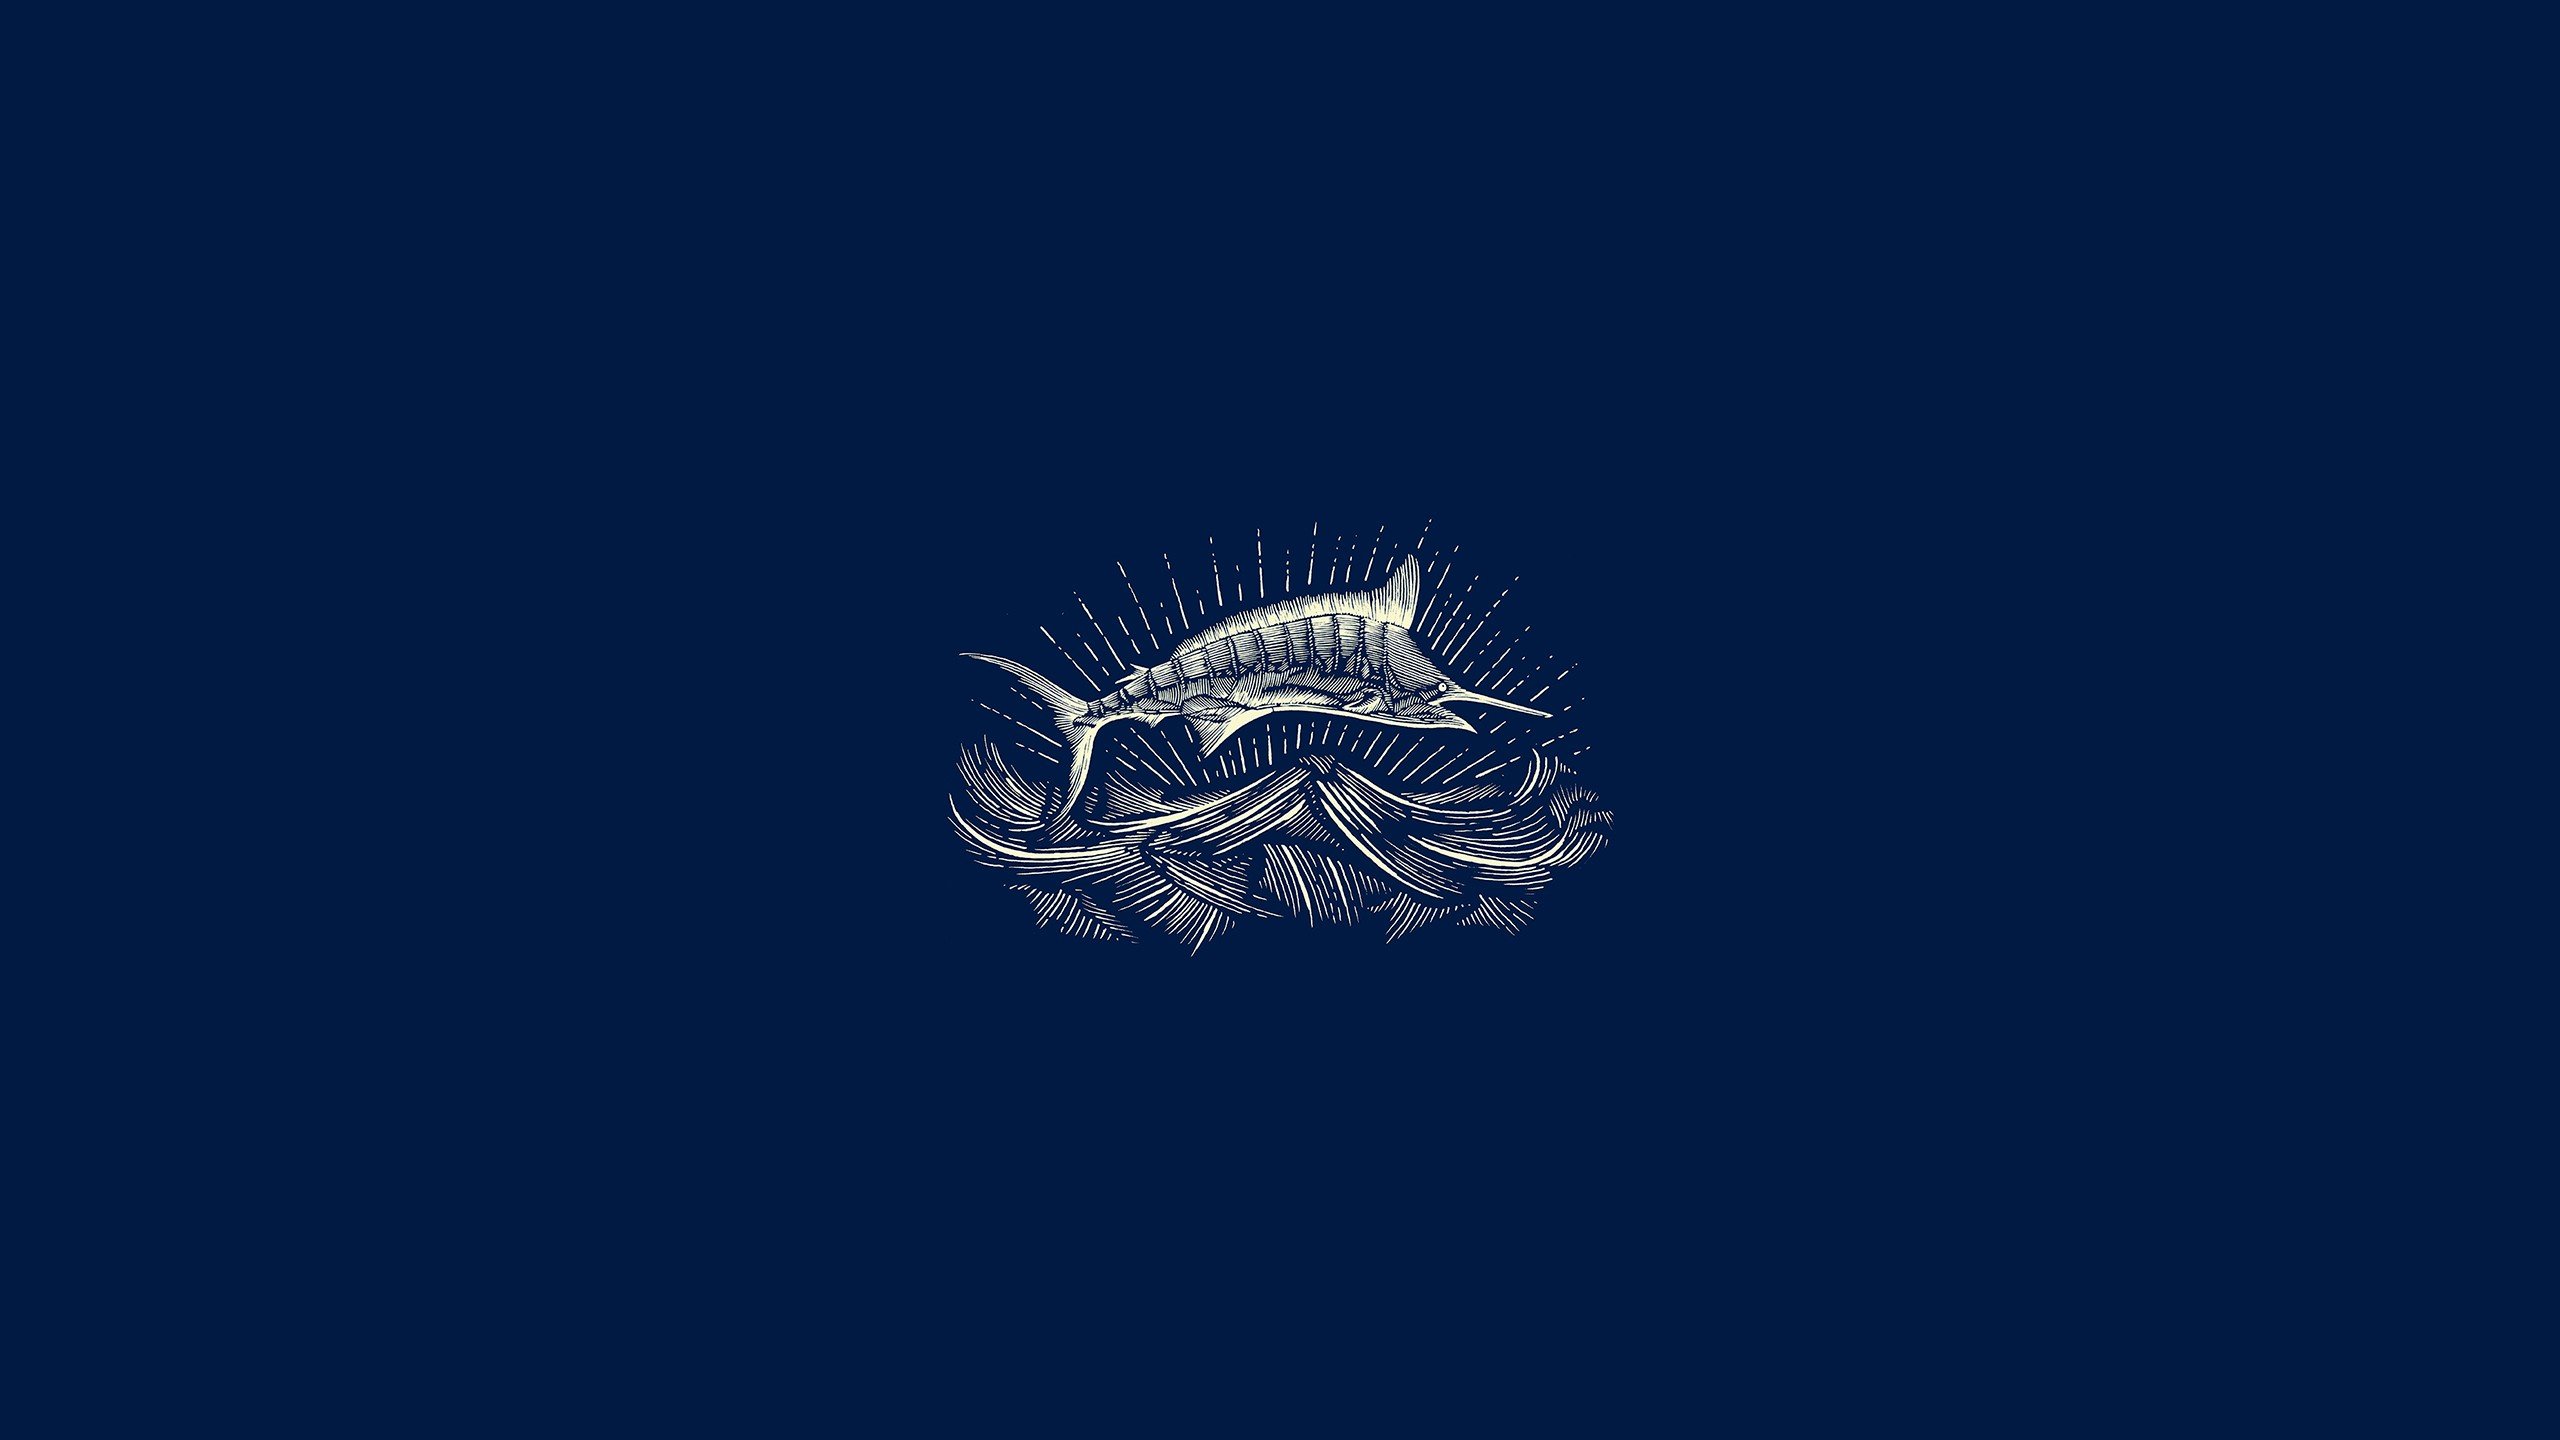 Illustration Marlin Fish Jumping Blue Background